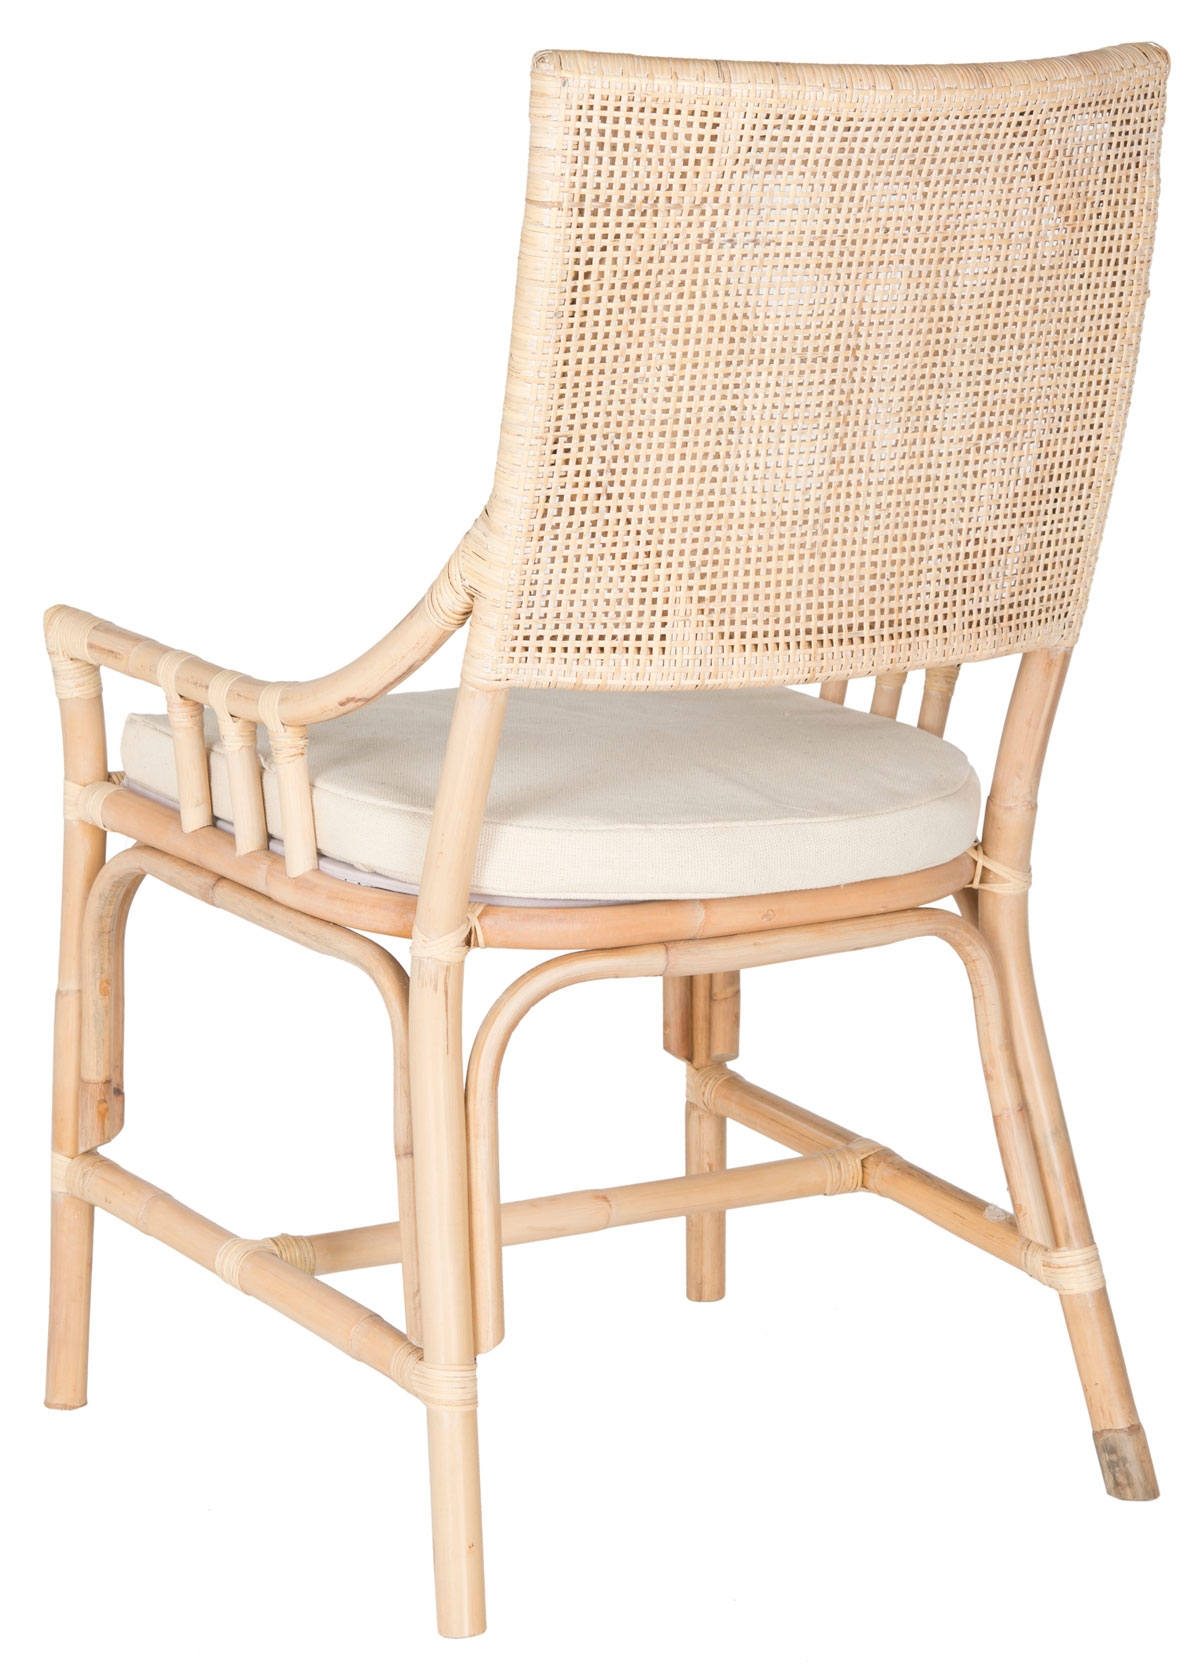 Donatella Rattan Chair - Natural White Wash - Safavieh - Image 4